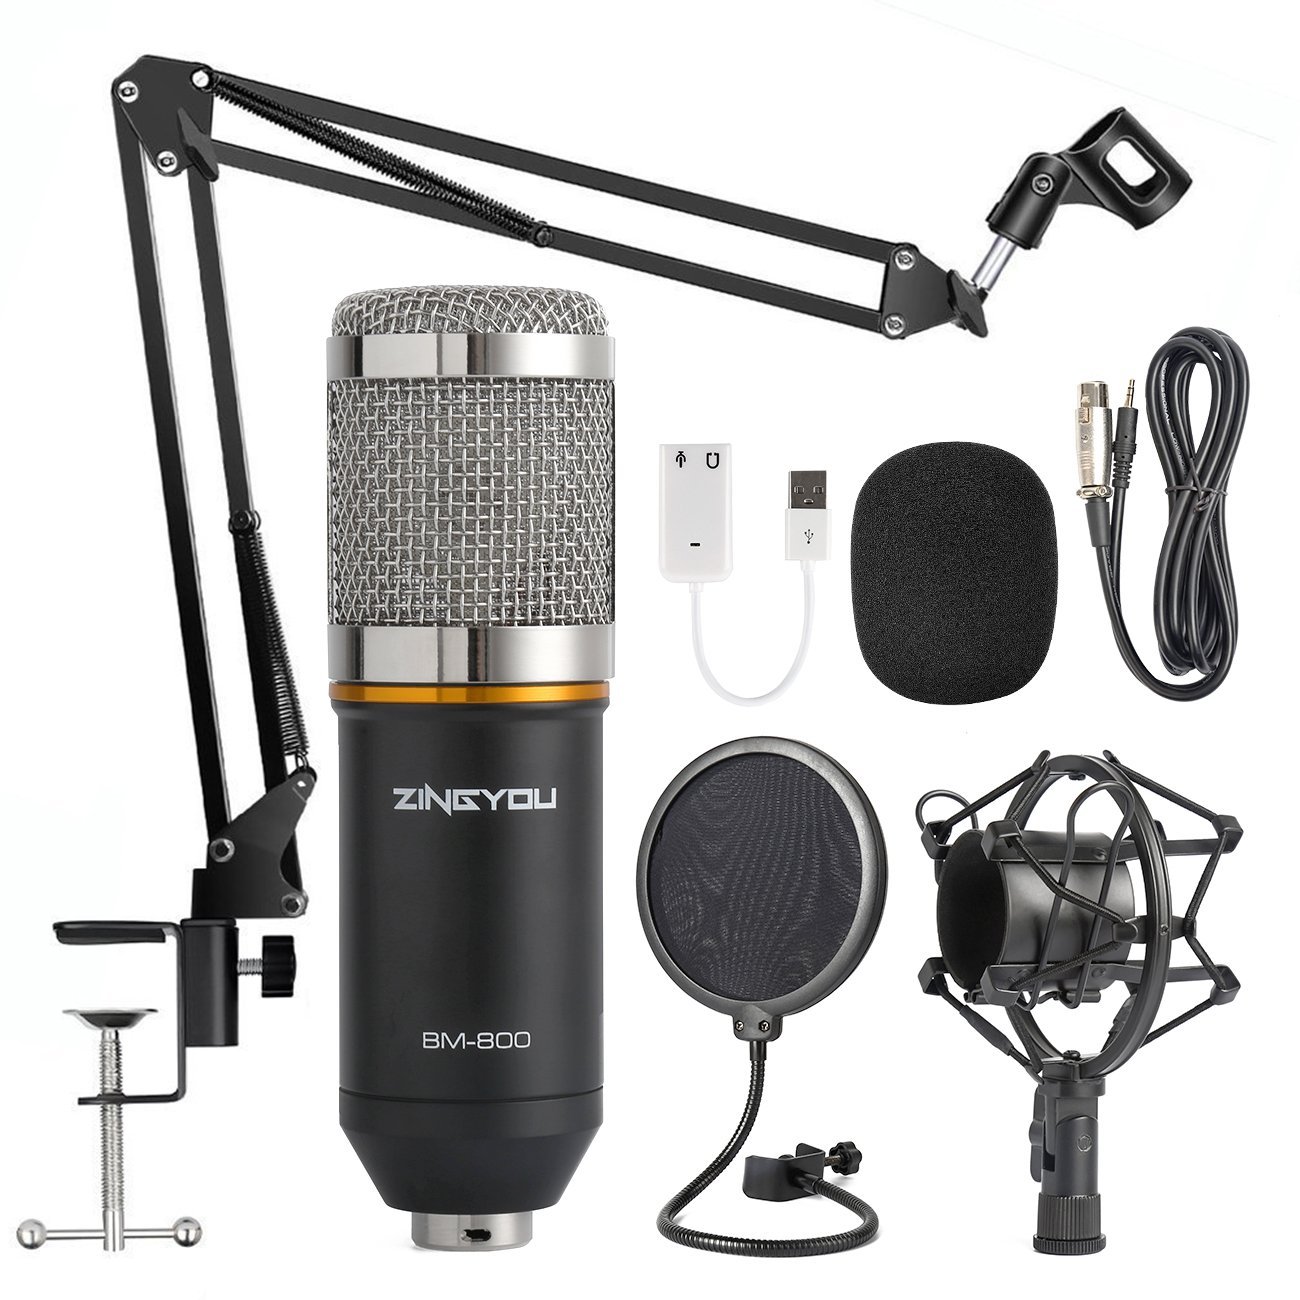 ZINGYOU Condenser Microphone Bundle, BM-800 Mic Kit with Adjustable Mic Suspension Scissor Arm, Shock Mount and Double-layer Pop Filter for Studio Recording & Brocasting (BM-800 Microphone Bundle)